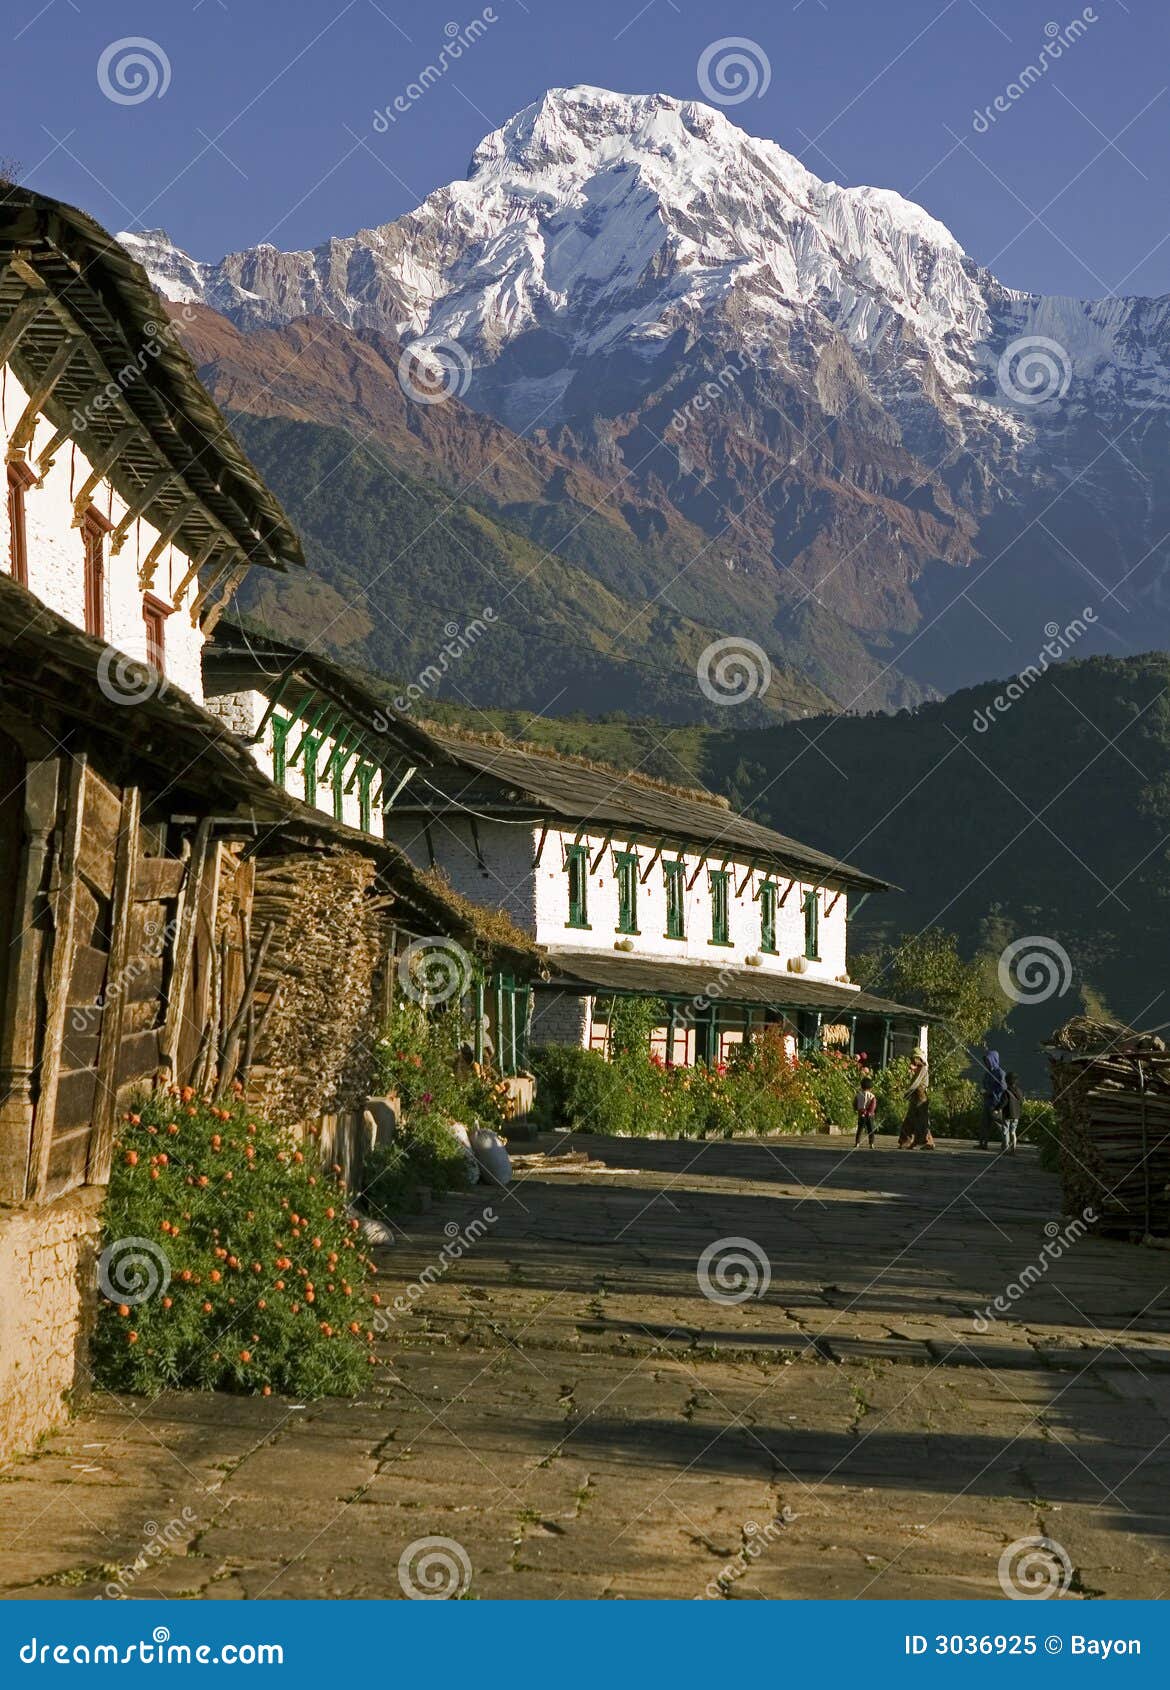 ghandruk village in nepal